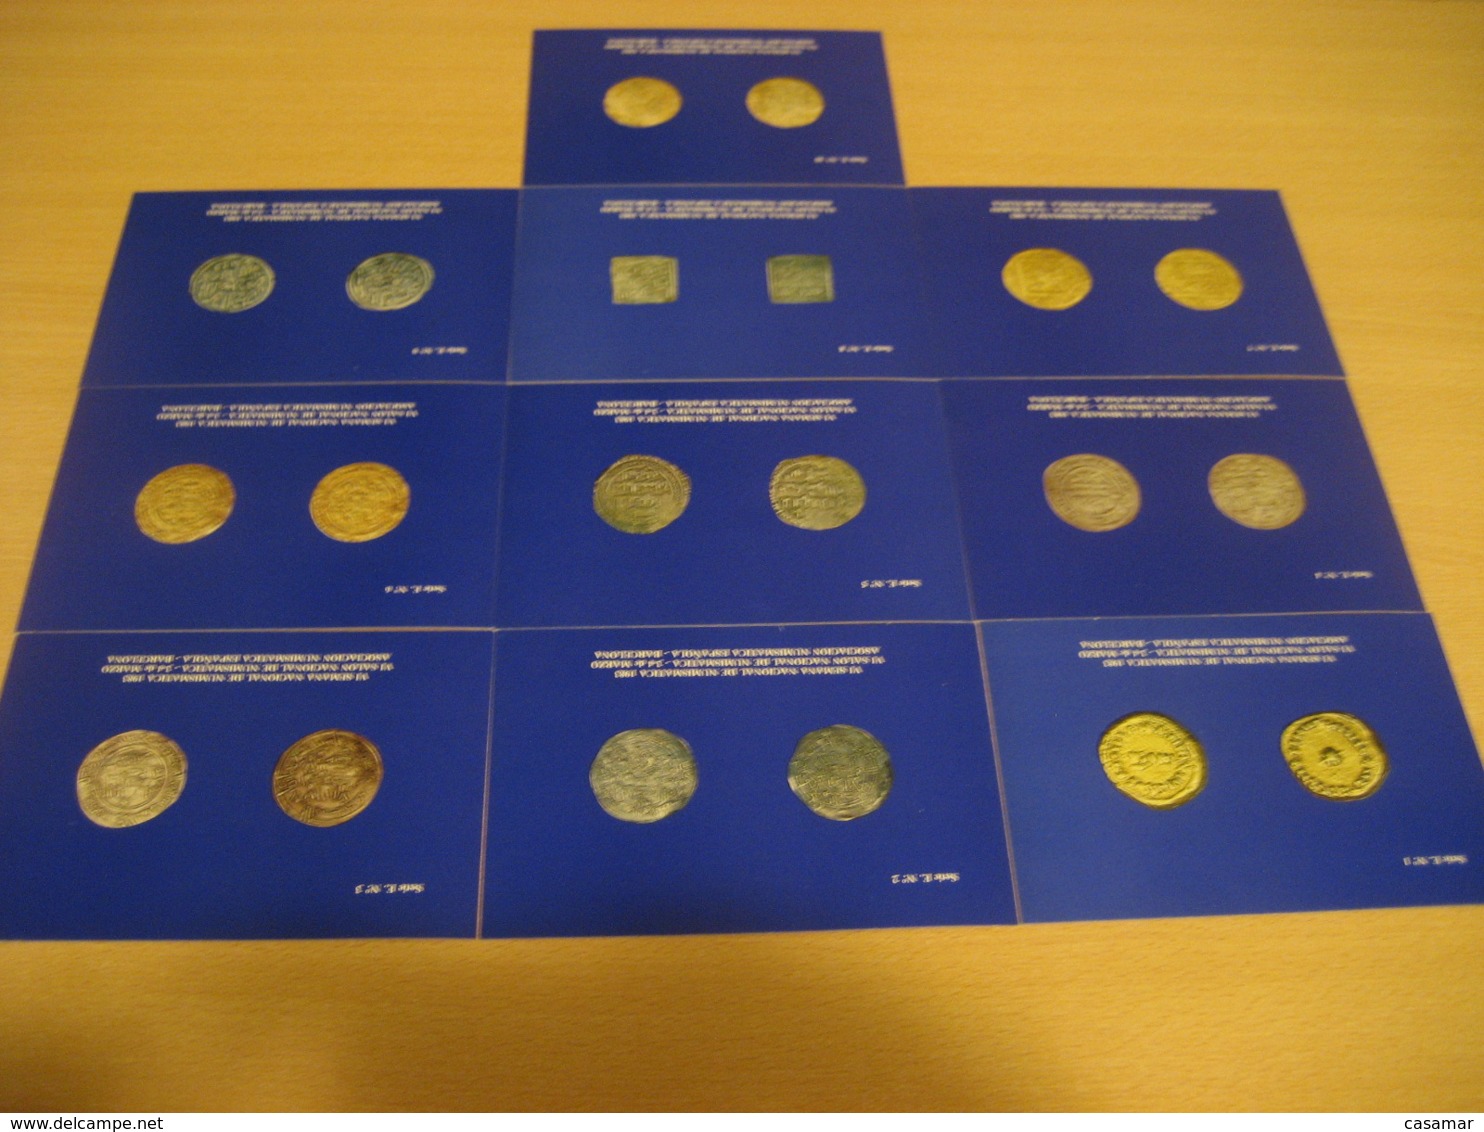 BARCELONA 1983 Semana Numismatica Cancel 10 Set Post Card Monedas Moneda SPAIN Coin Coins Numismatics Numismatique - Münzen